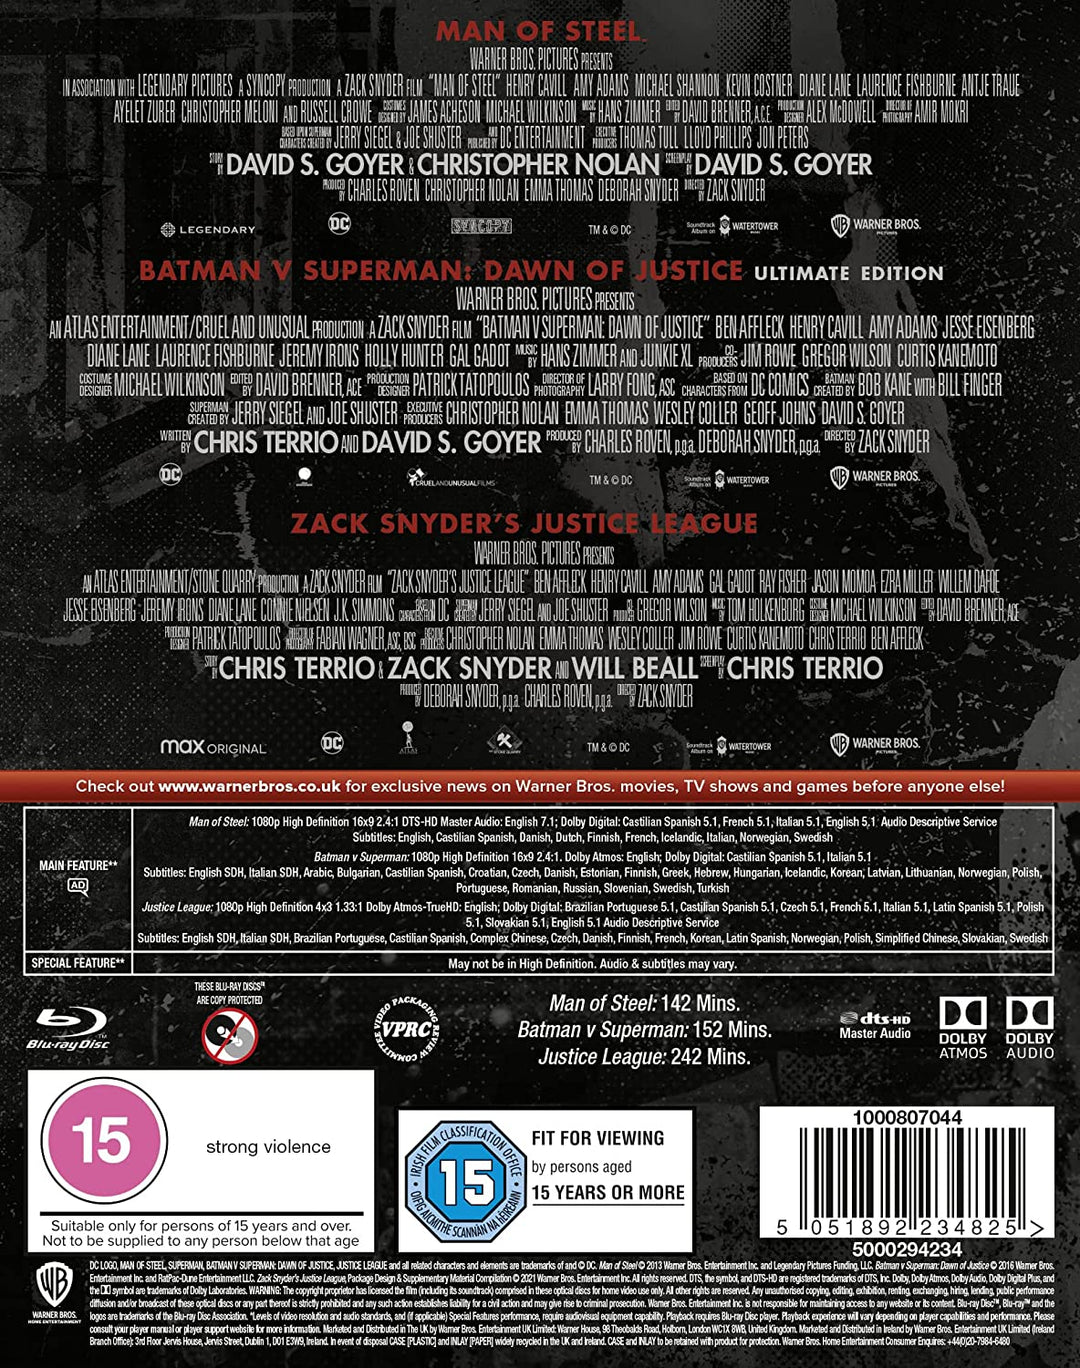 ZACK SNYDER'S JUSTICE LEAGUE TRILOGY [2021] [Region Free] [Blu-ray]